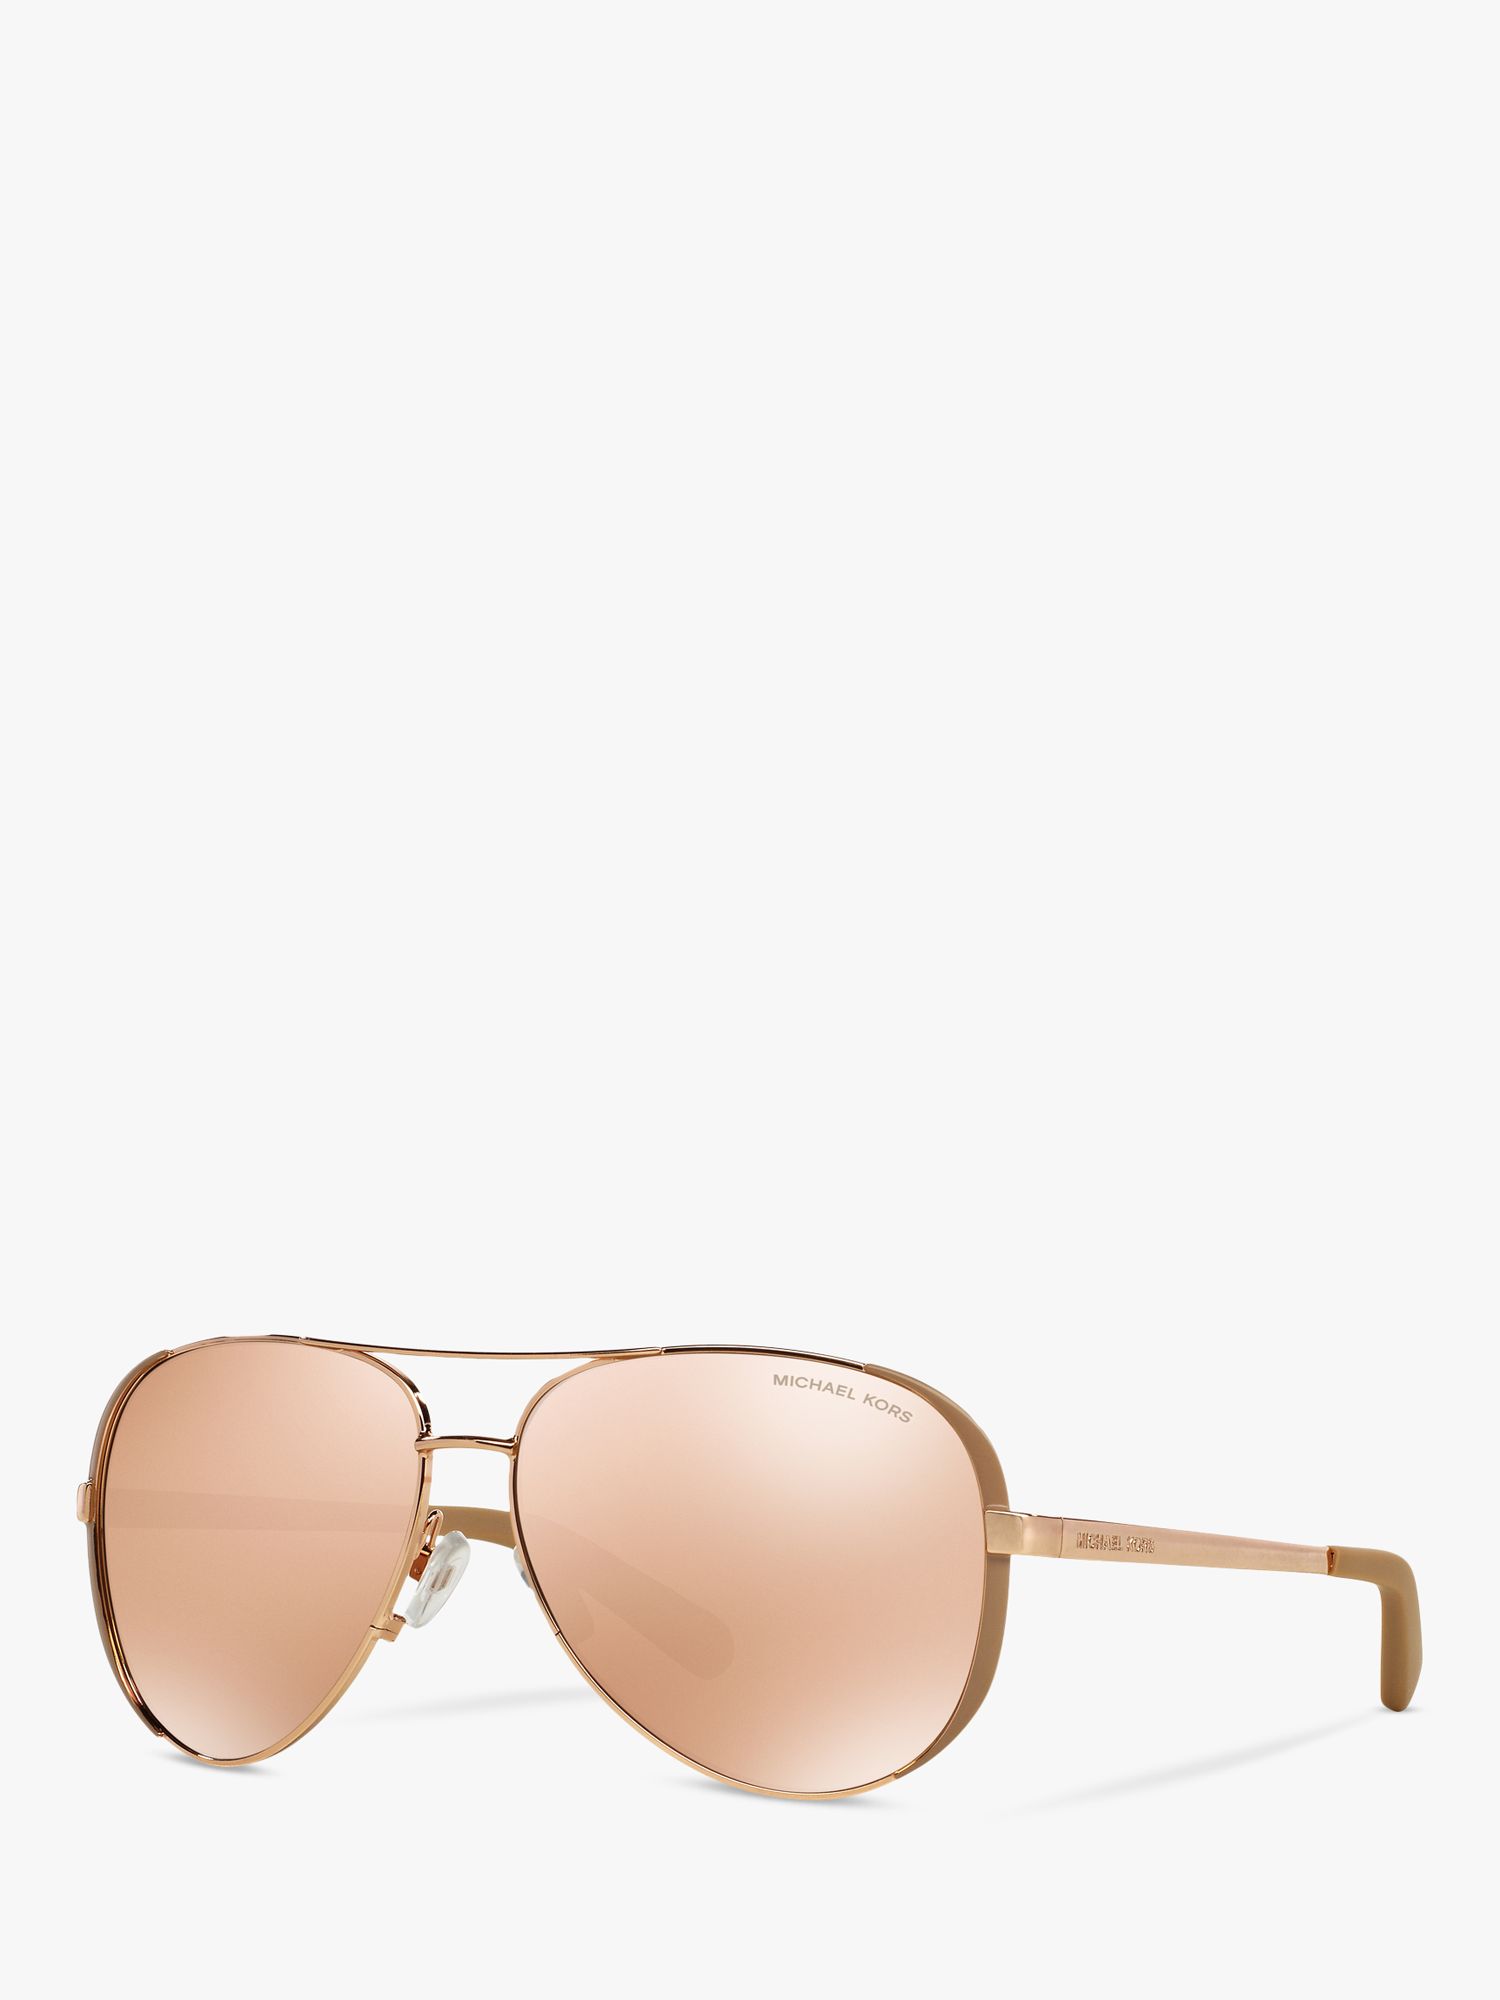 michael kors pink mirrored sunglasses